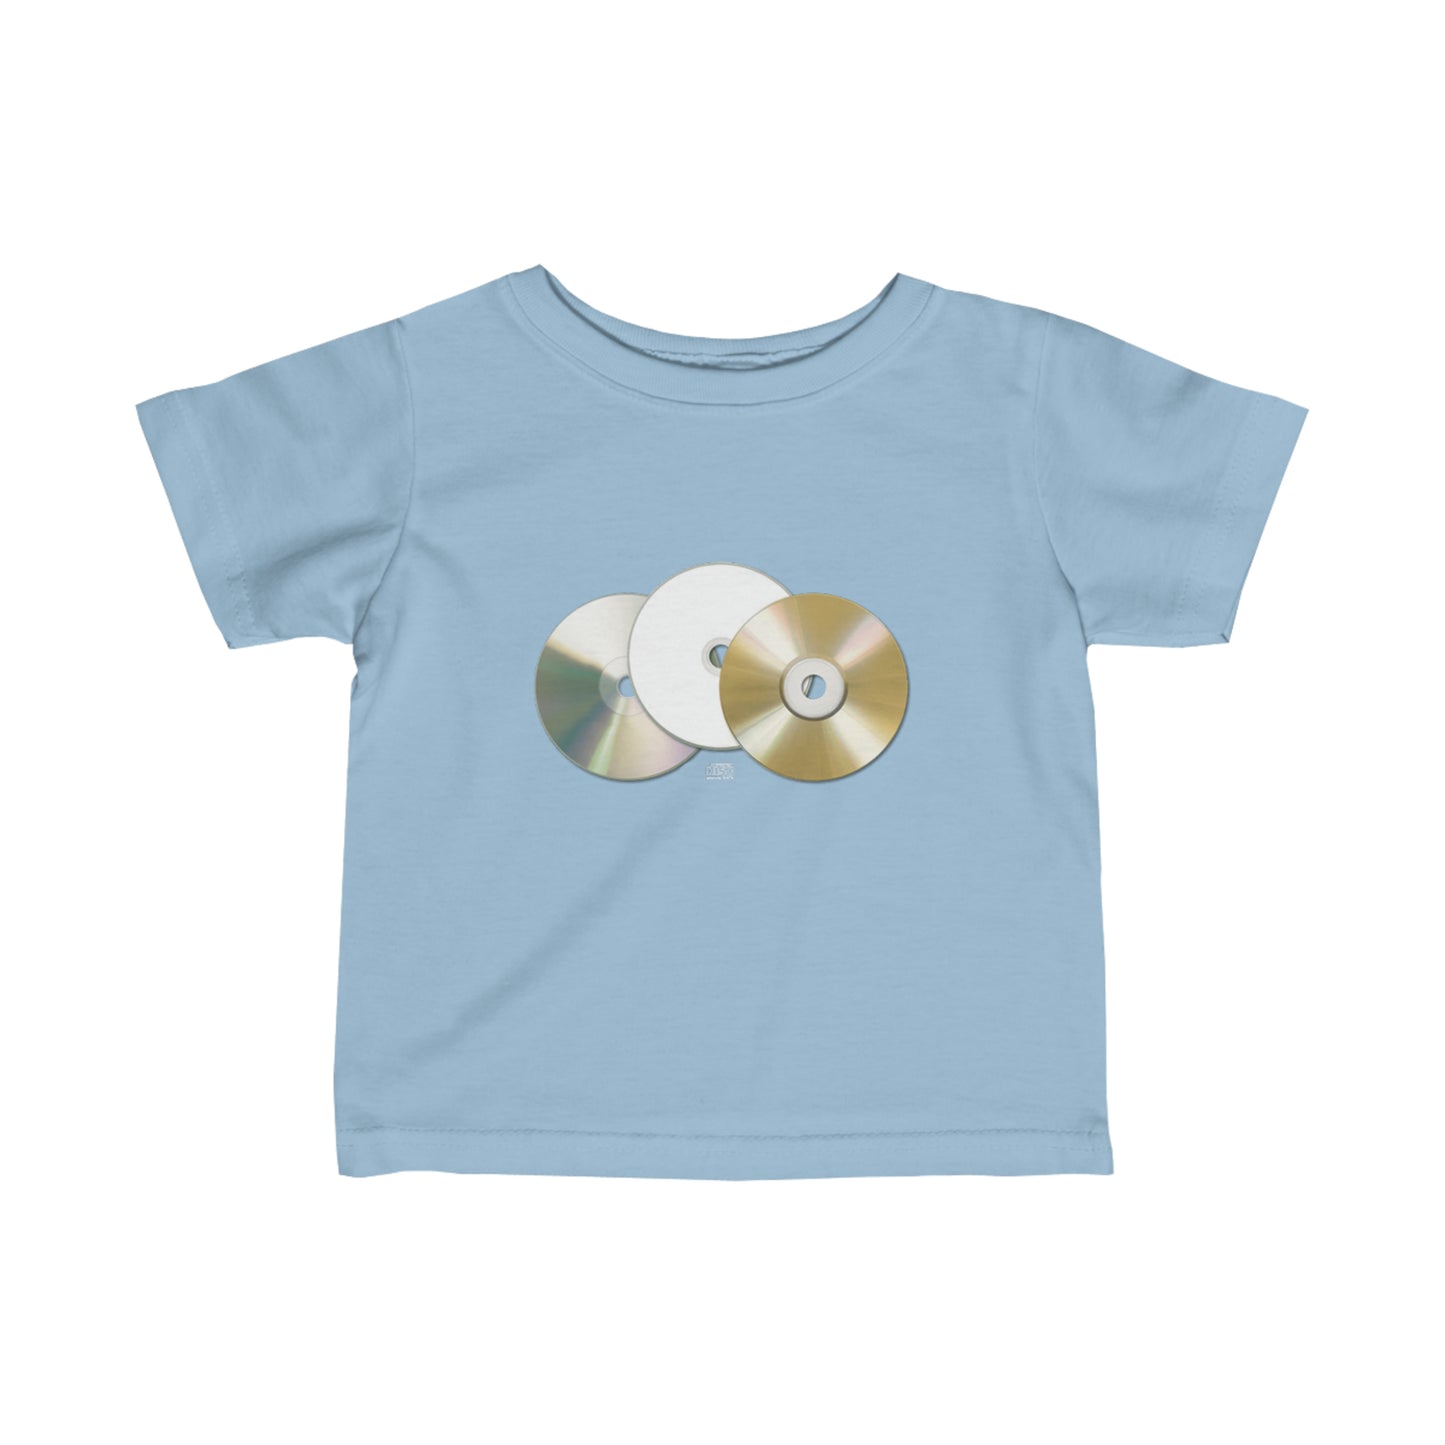 3 CDs Infant T-Shirt